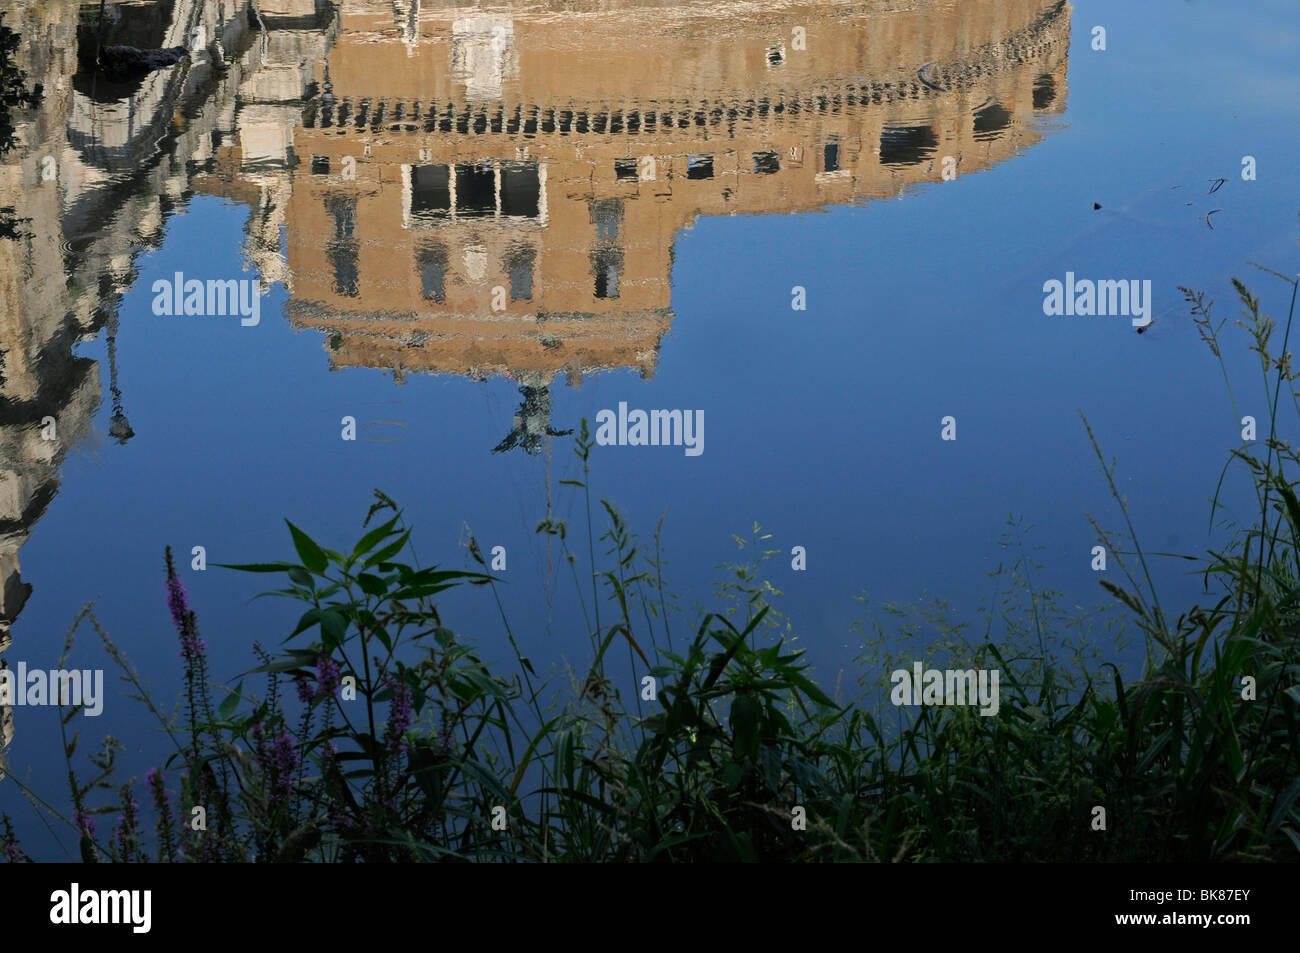 El Castel Sant'Angelo, Roma, Lazio, Italia, Europa Foto de stock